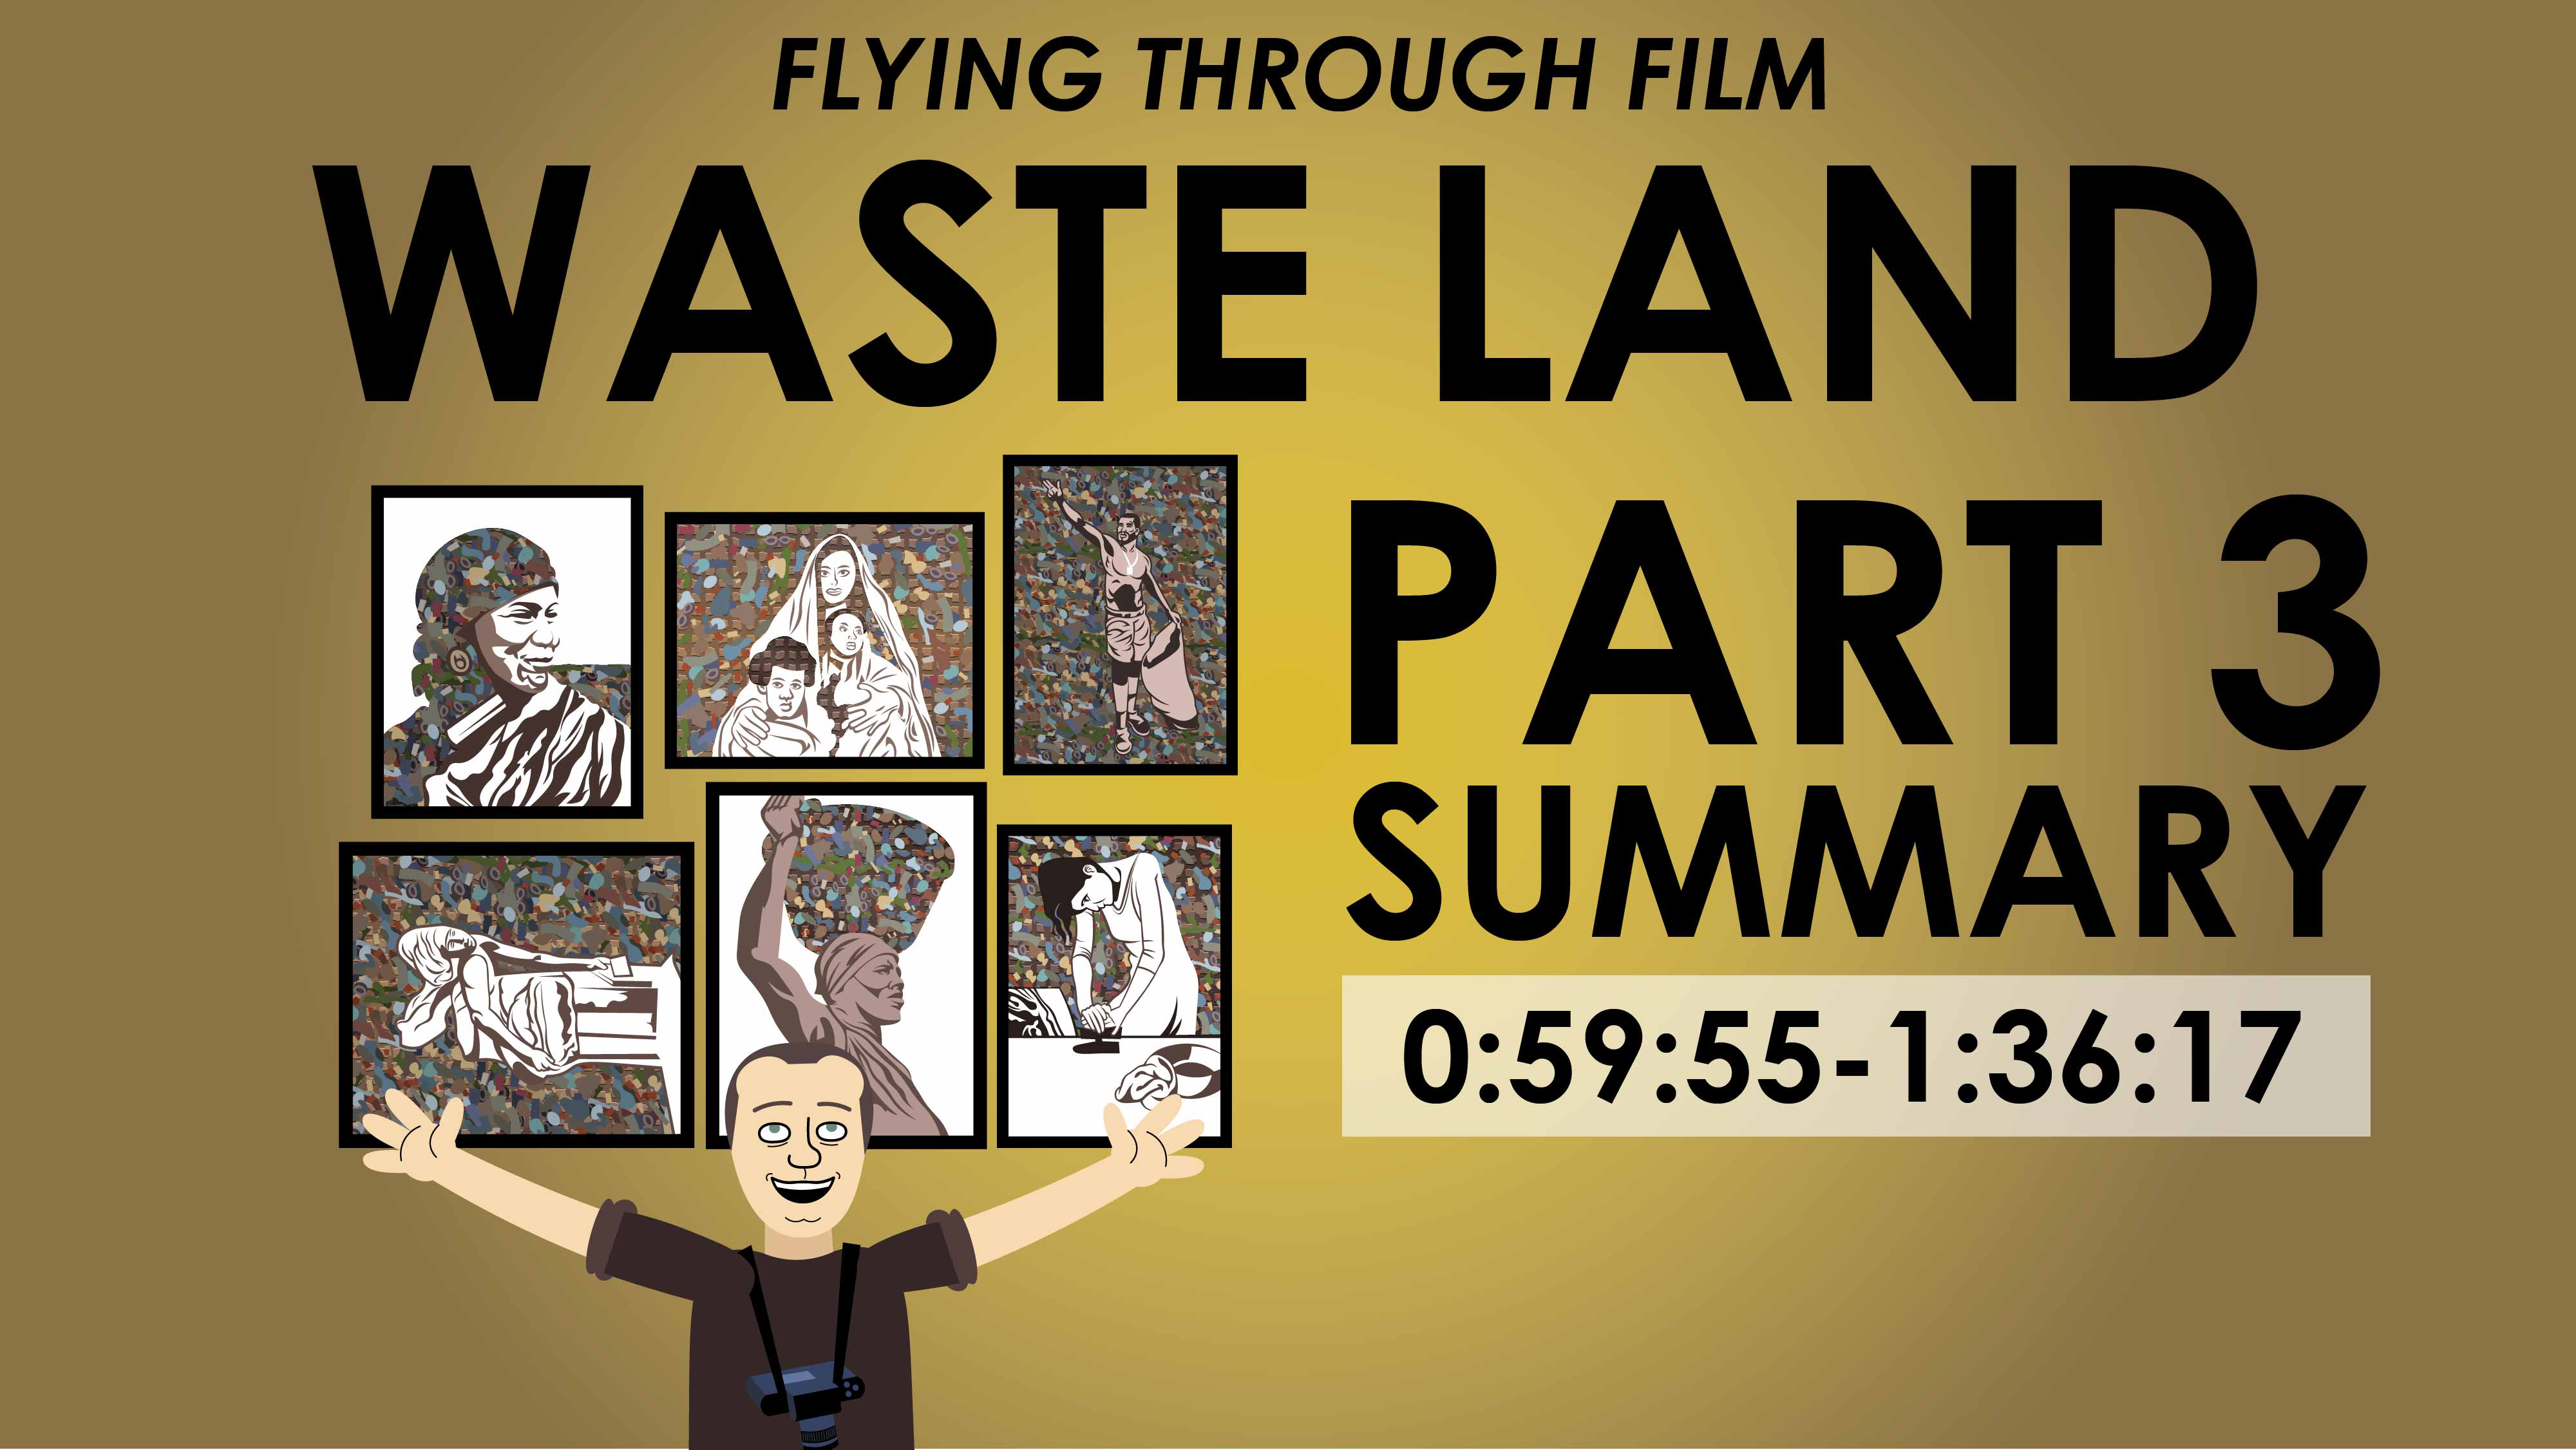 Waste Land - Part 3 Summary (0:59:55-1:36:17) - Flying Through Film Series